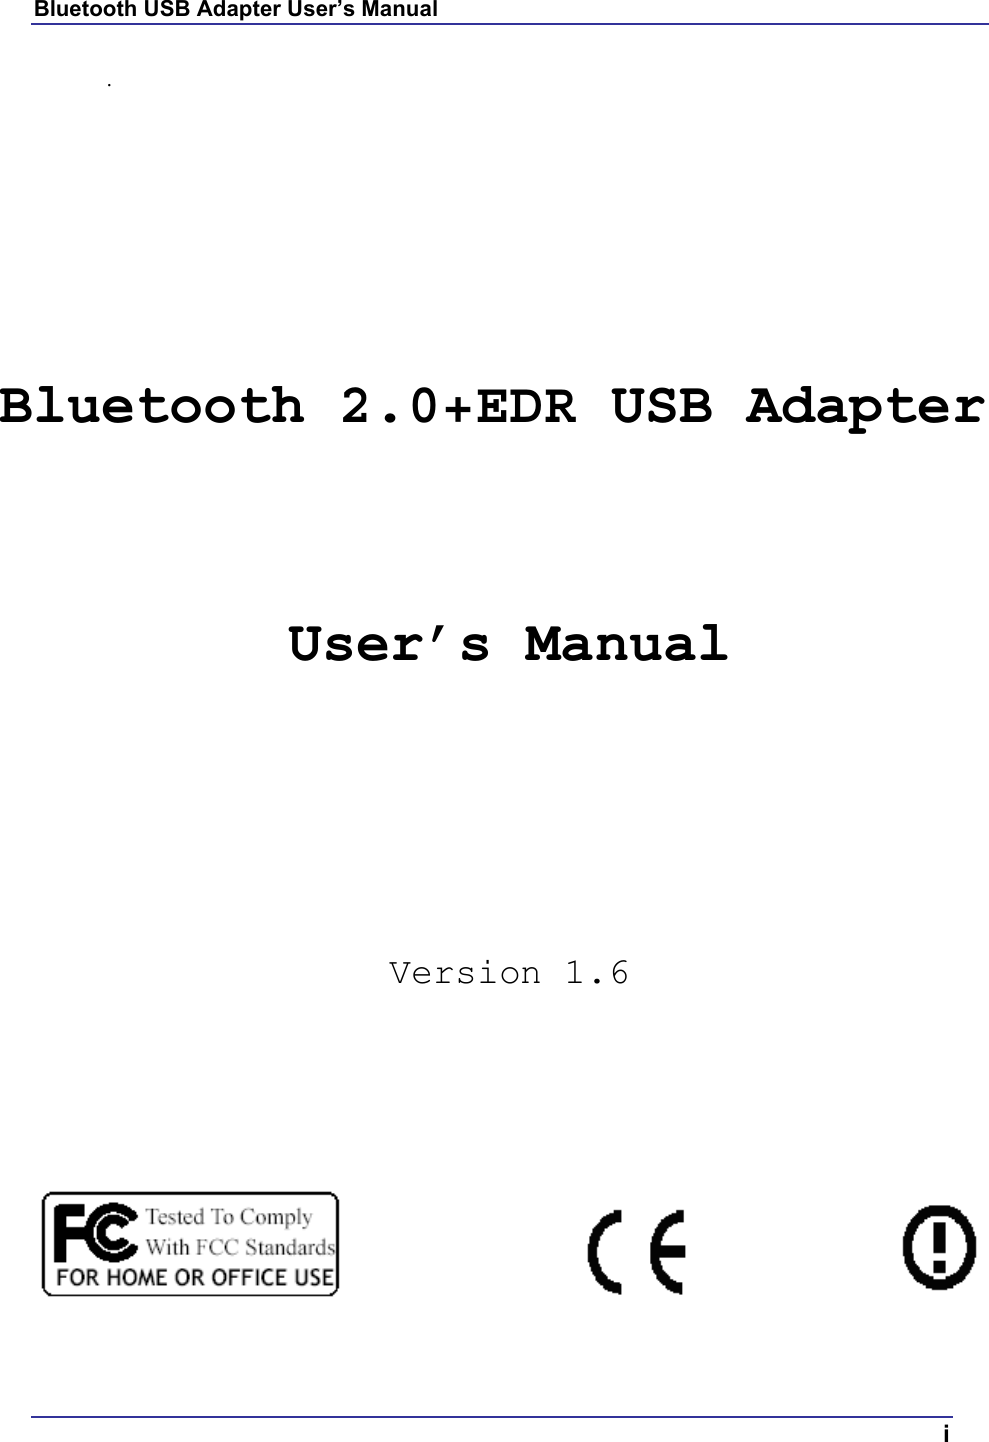 Bluetooth USB Adapter User’s Manual  i .         Bluetooth 2.0+EDR USB Adapter  User’s Manual      Version 1.6       